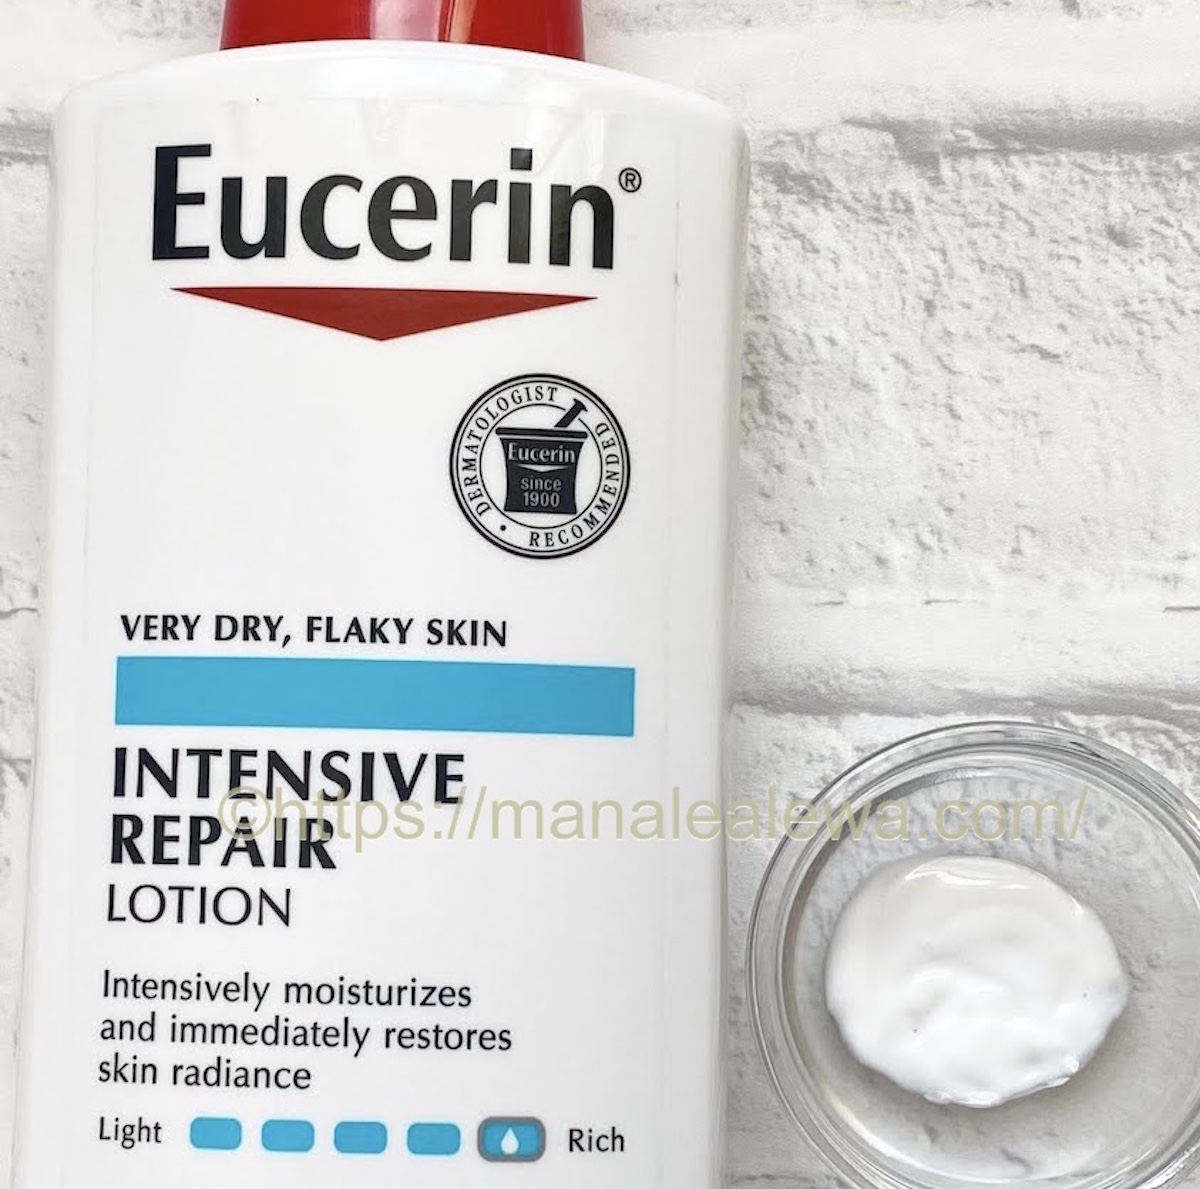 Eucerin-intensive-repair-lotion-texture